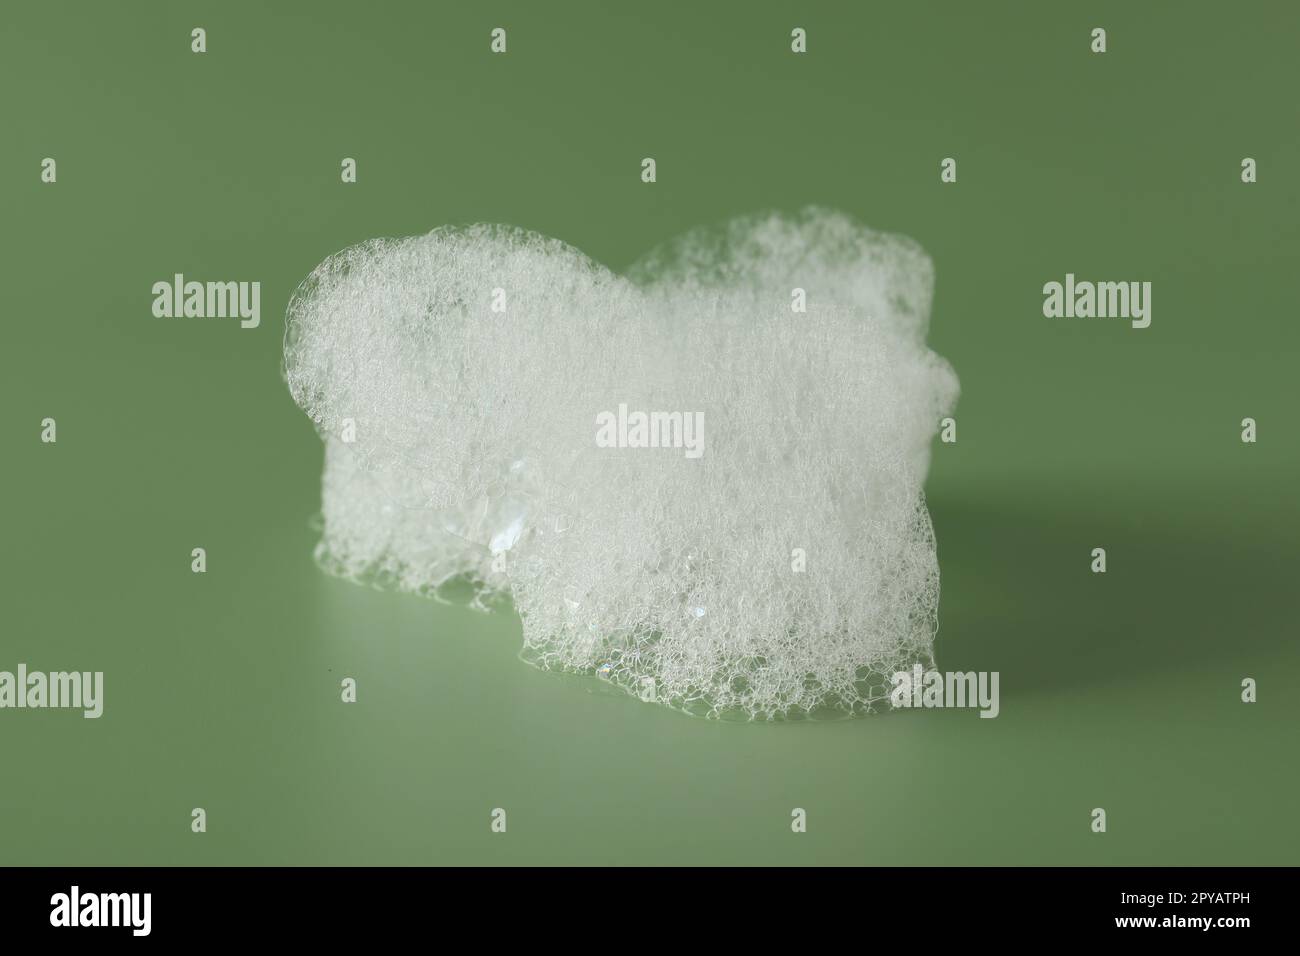 https://c8.alamy.com/comp/2PYATPH/drop-of-fluffy-bath-foam-on-olive-background-2PYATPH.jpg